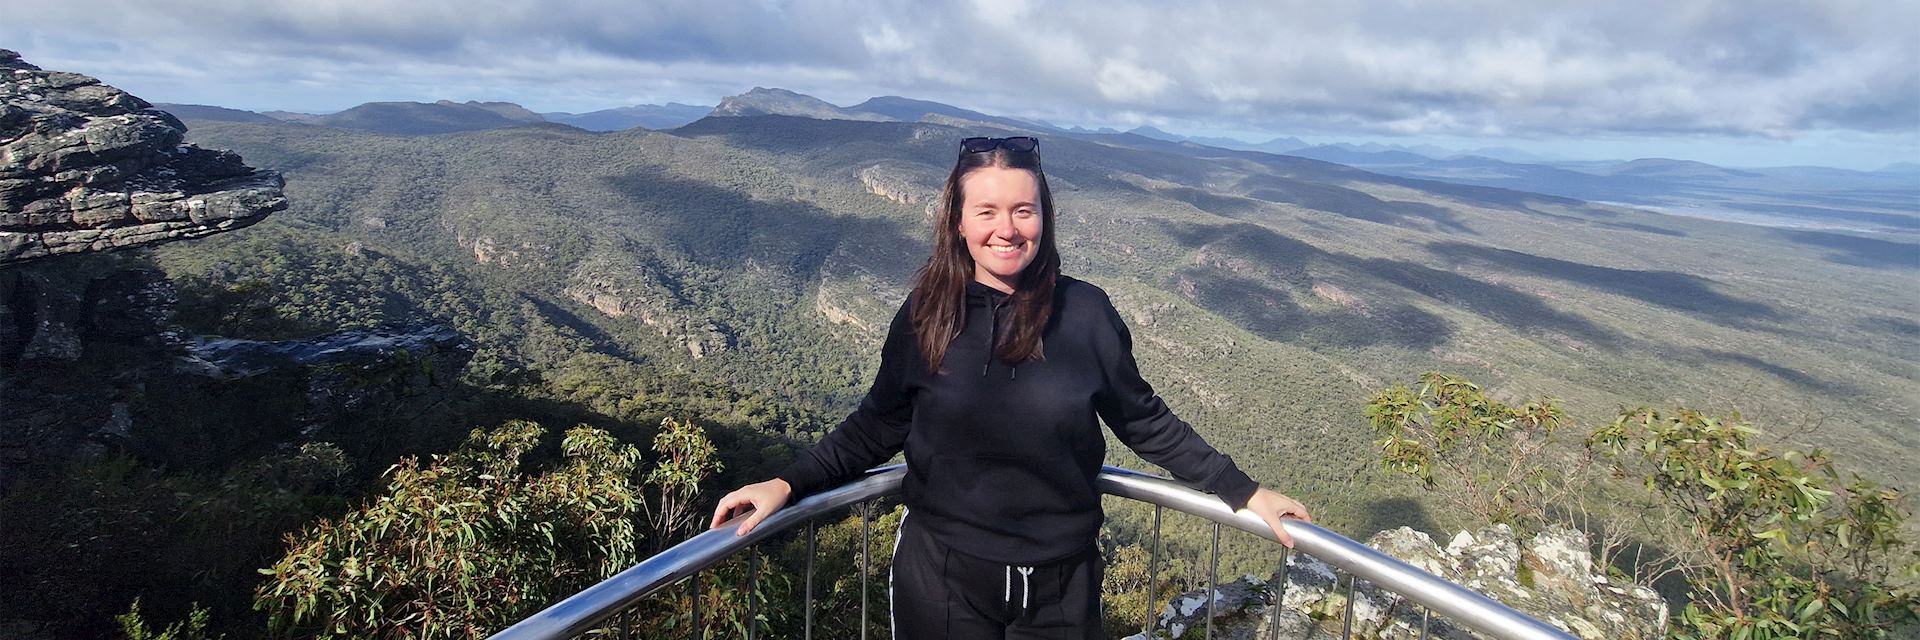 Hannah in the Grampian Mountains, Australia